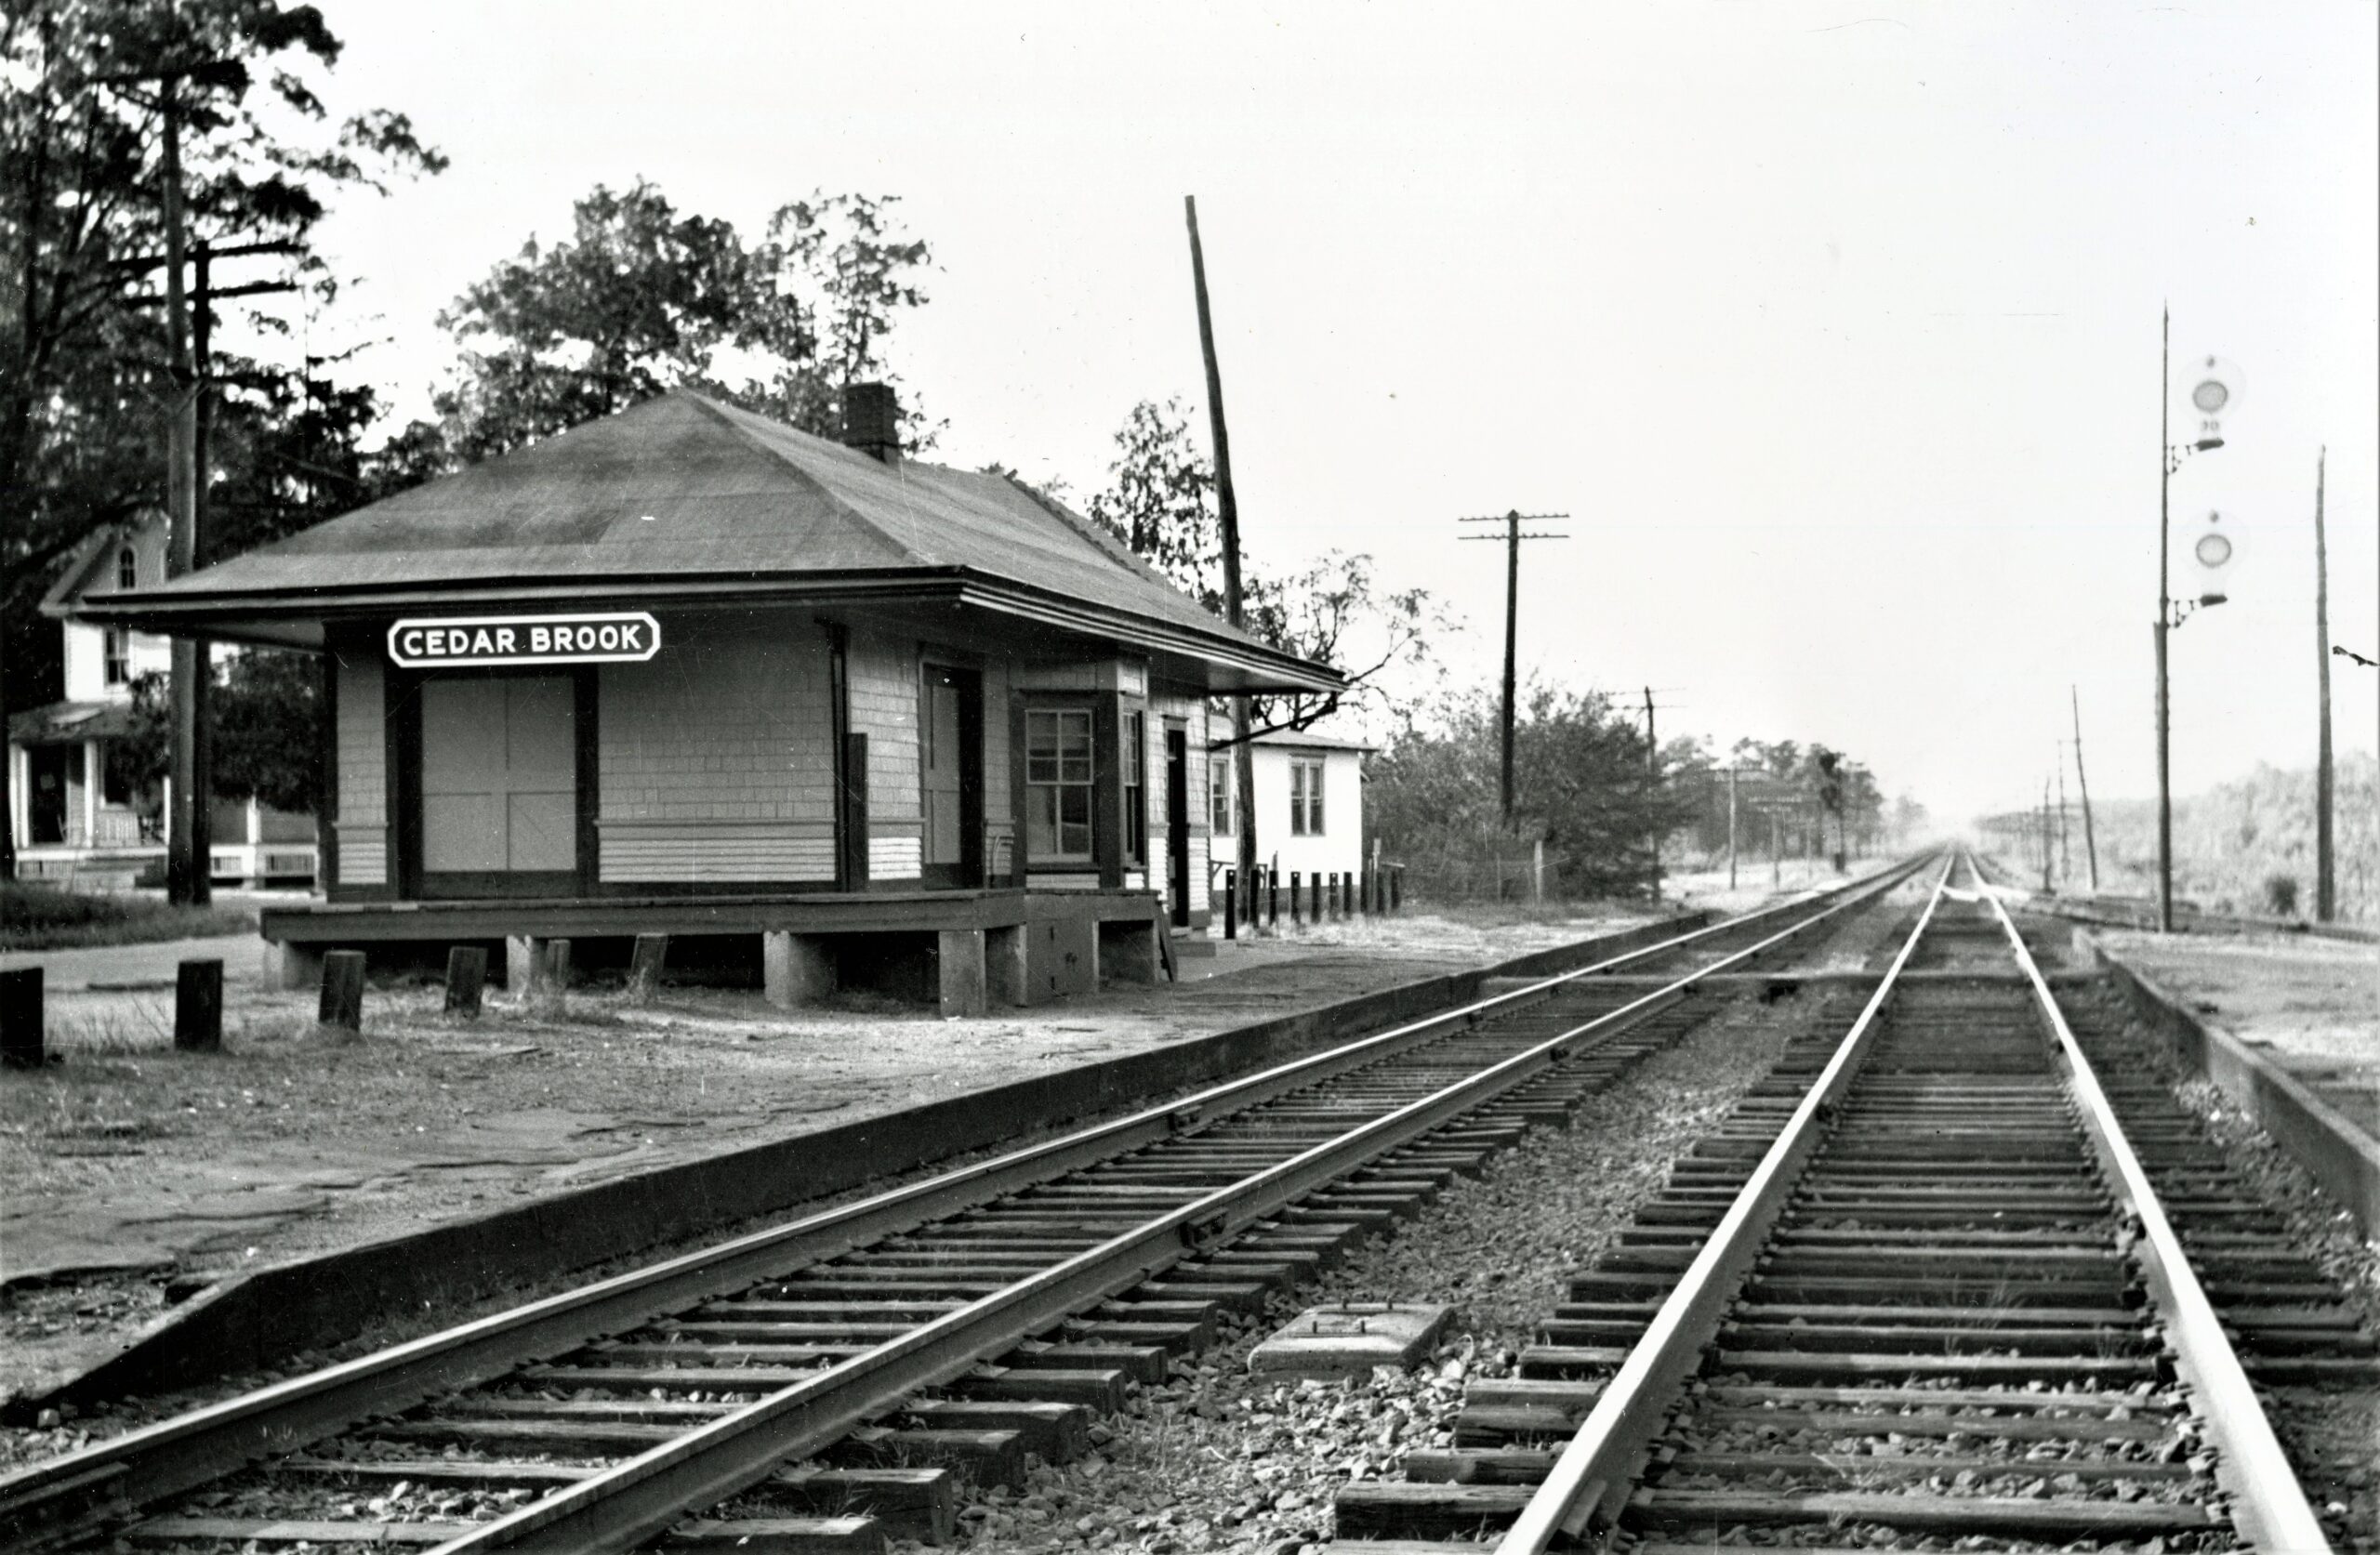 Pennsylvania Reading Seashore Lines | PRSL | Cedar brook, New Jersey | Passenger station | 1941 | Don Wentzel photograph